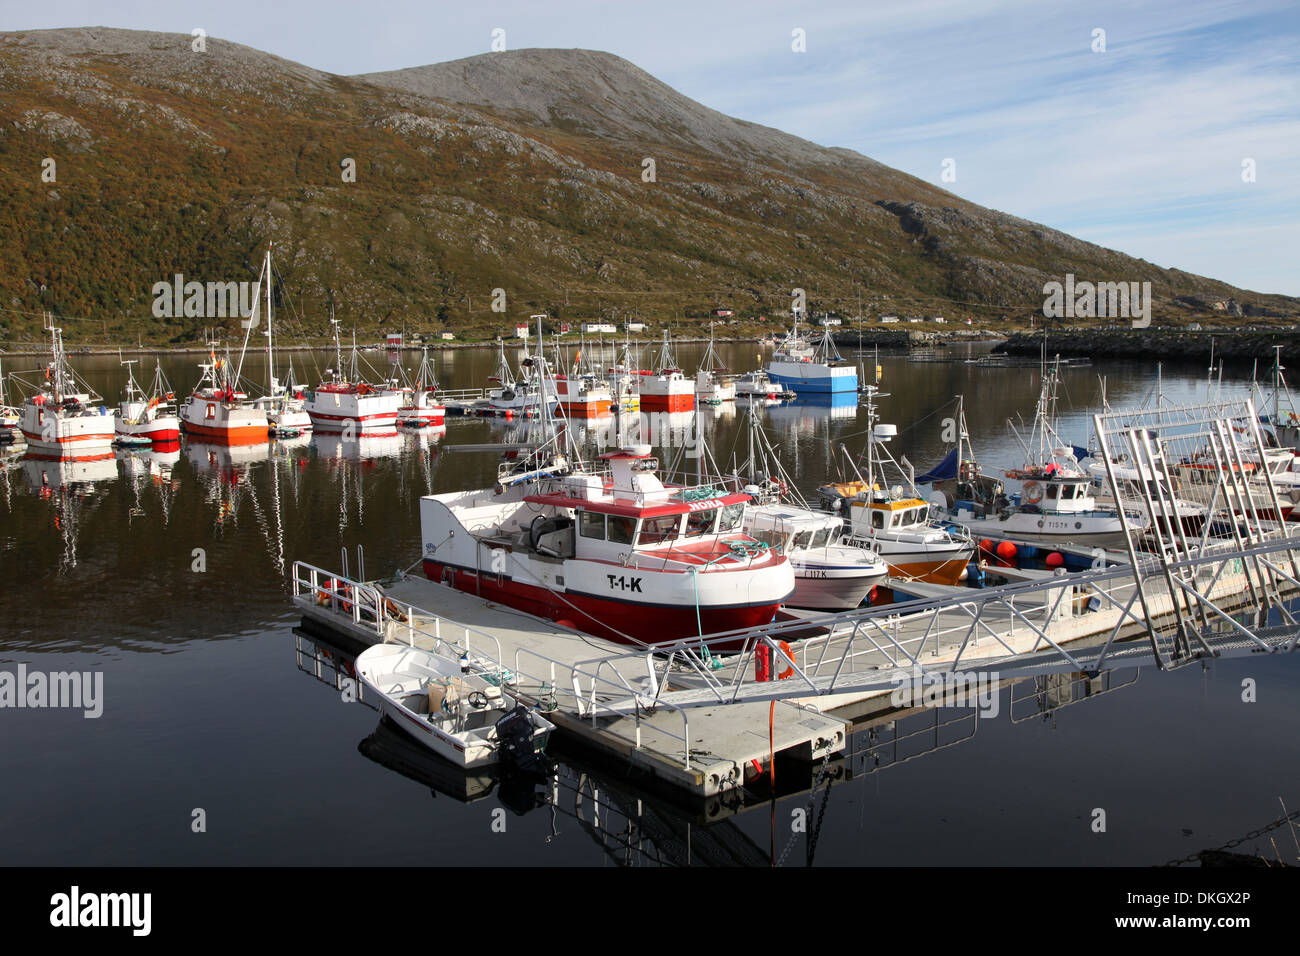 Fishing boats on a pontoon, Torsvaag, N Norway Stock Photo